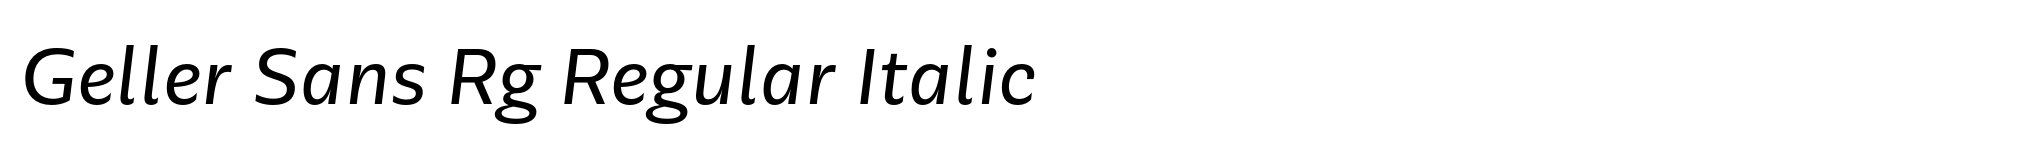 Geller Sans Rg Regular Italic image